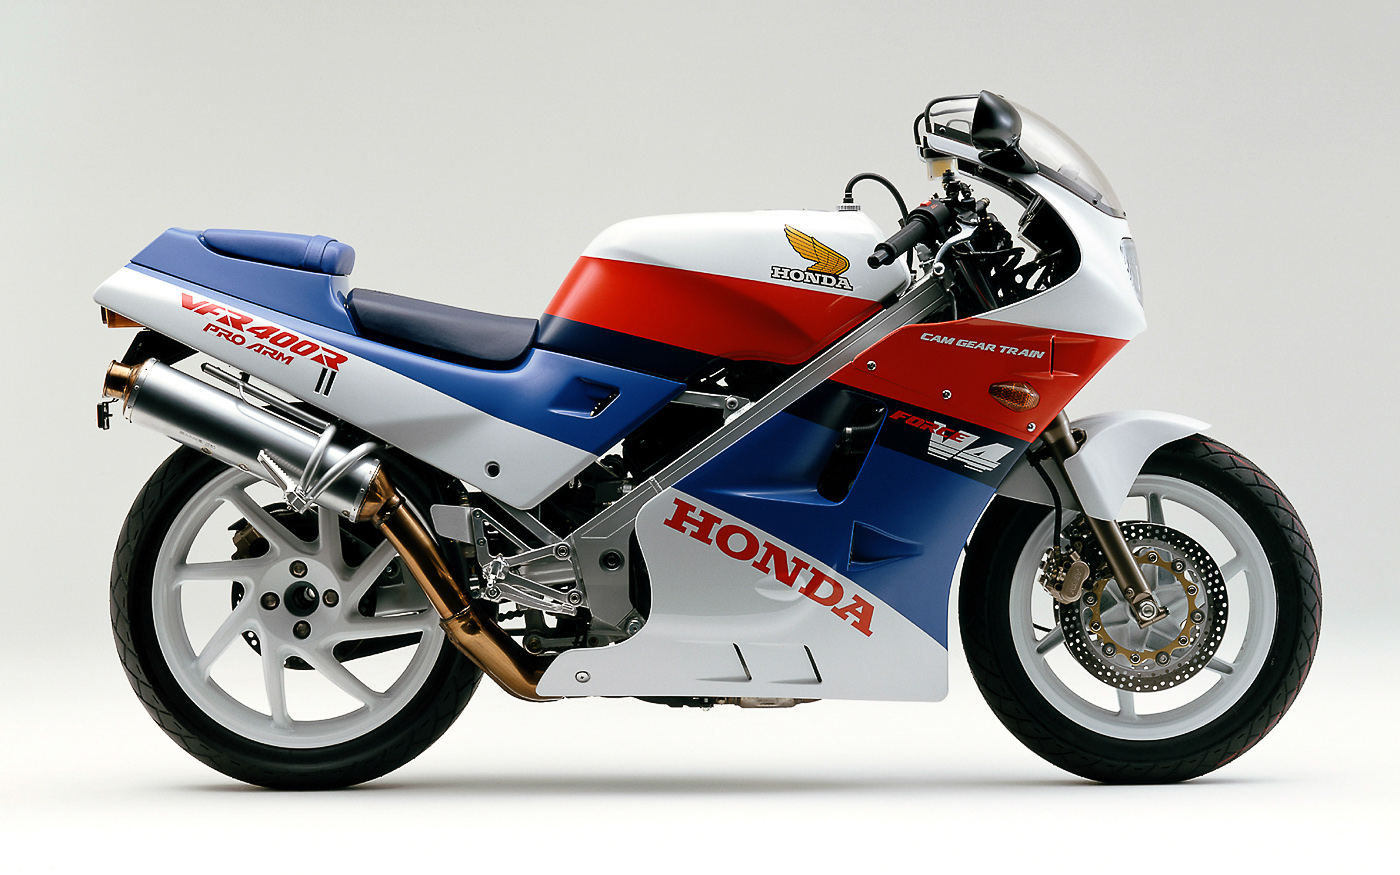 Honda vfr400r (rvf400r): review, history, specs - bikeswiki.com, japanese motorcycle encyclopedia